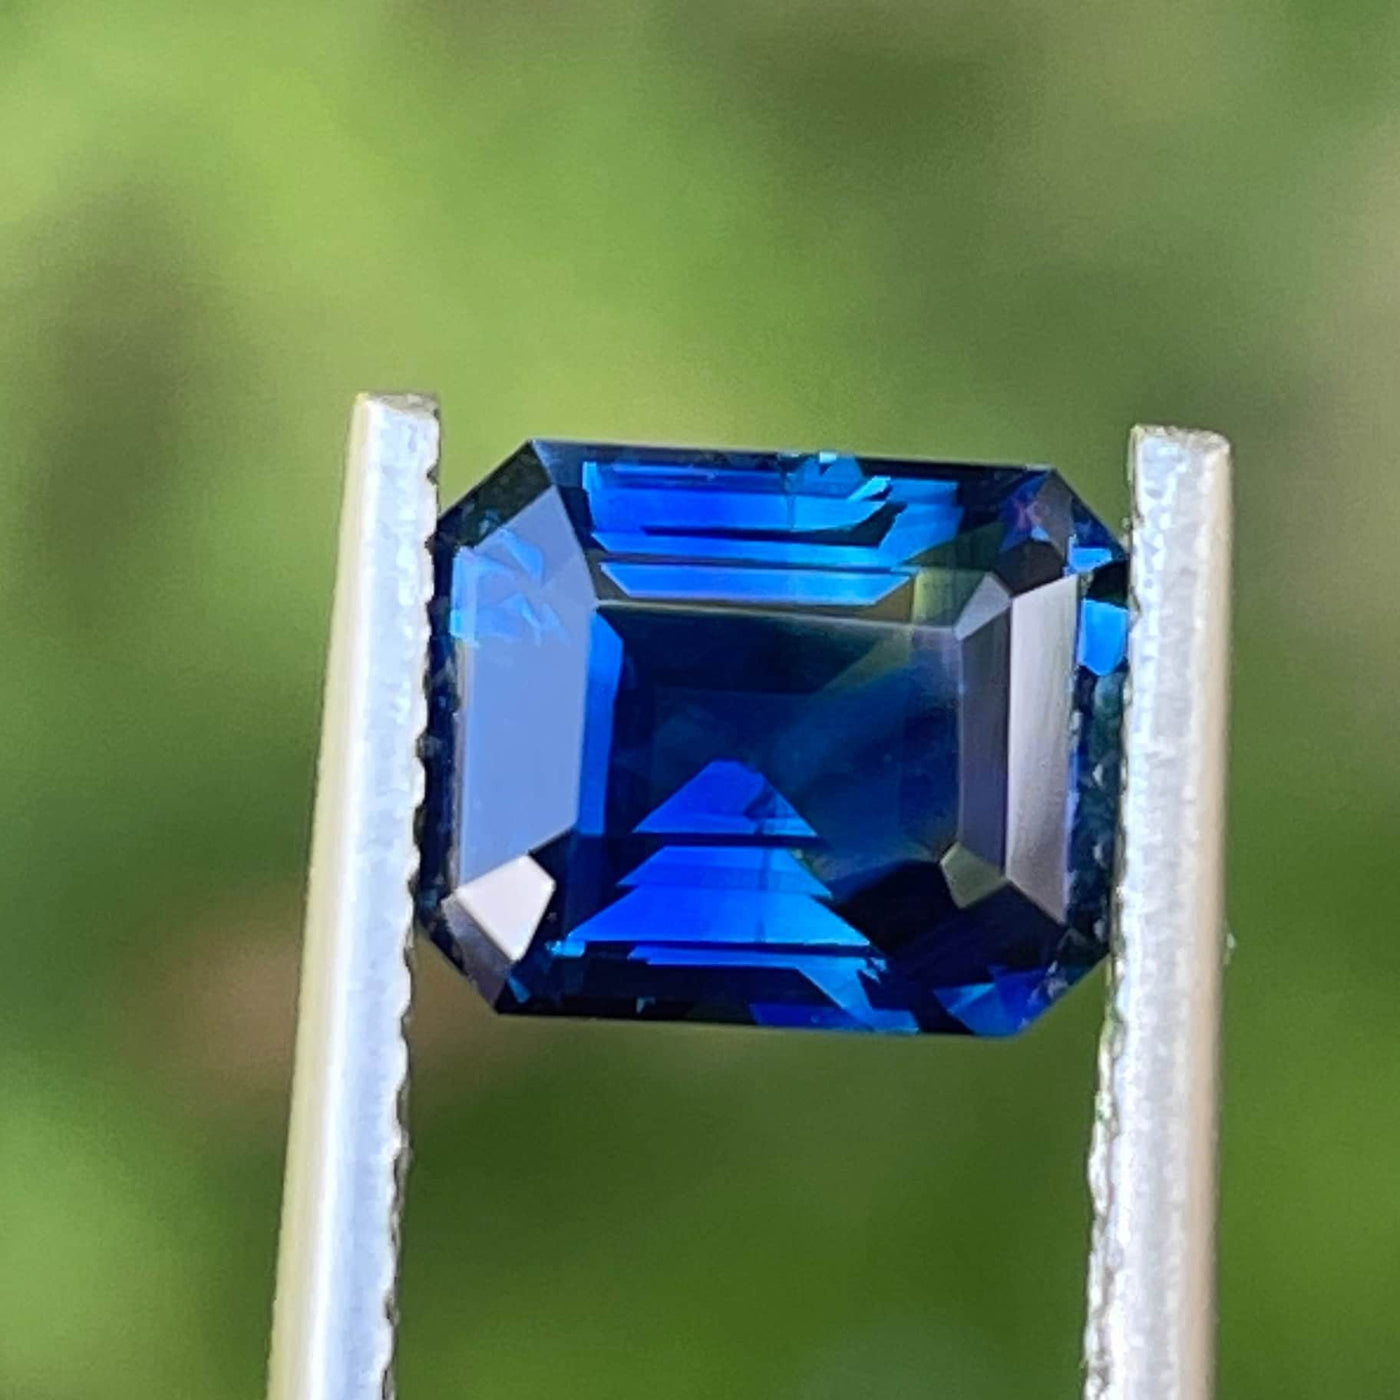 Blue Sapphire 2.02Ct